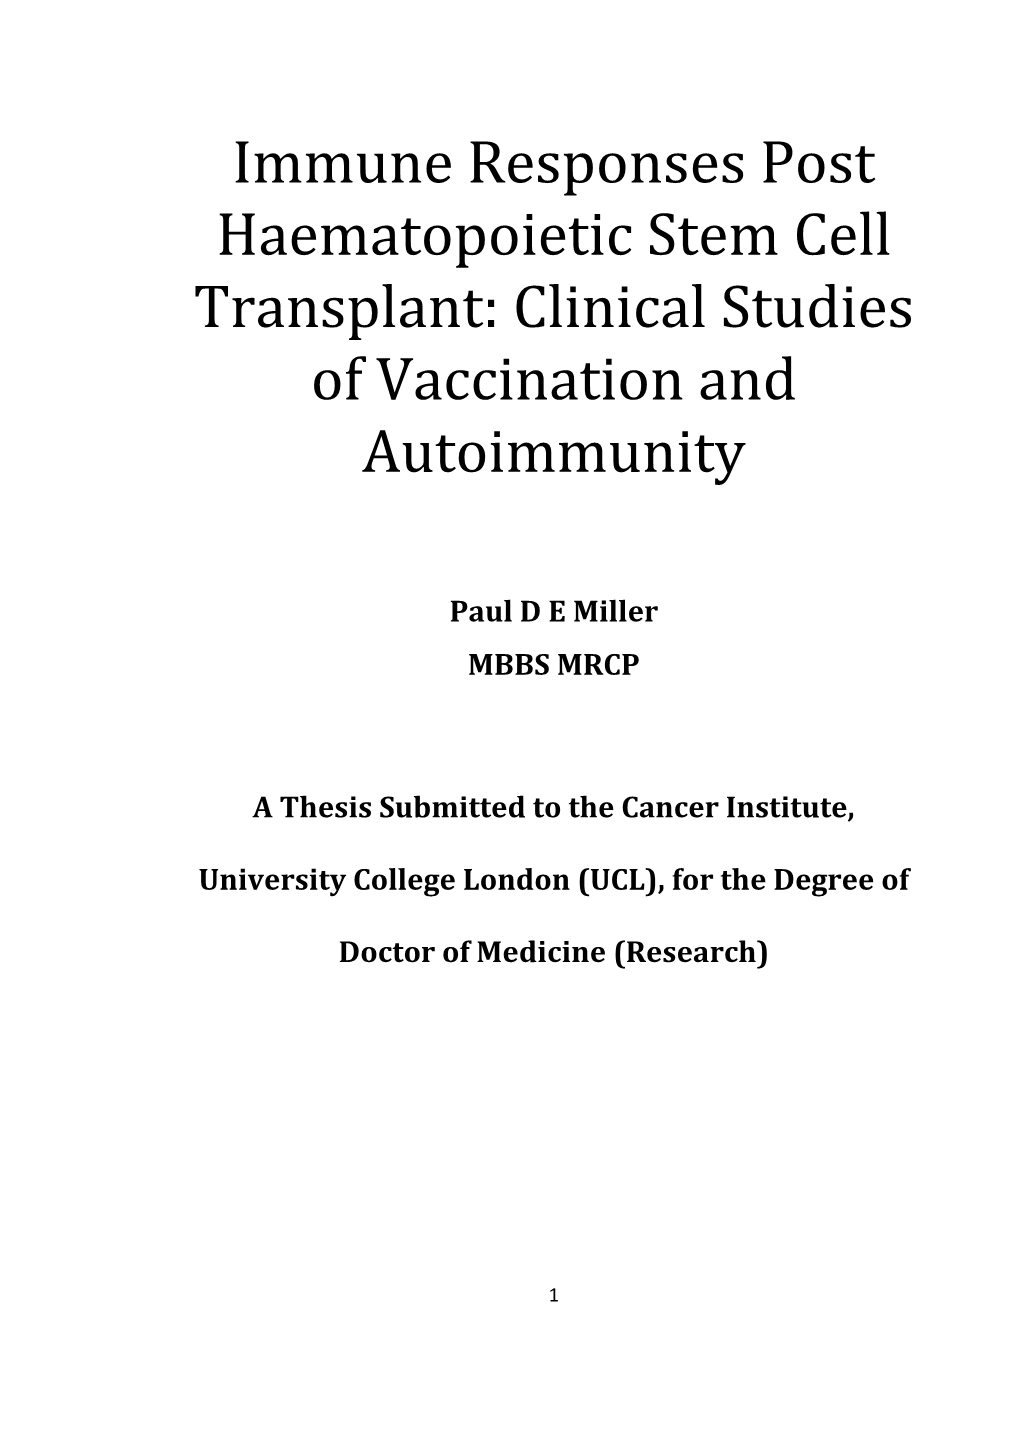 Immune Responses Post Haematopoietic Stem Cell Transplant: Clinical Studies of Vaccination and Autoimmunity